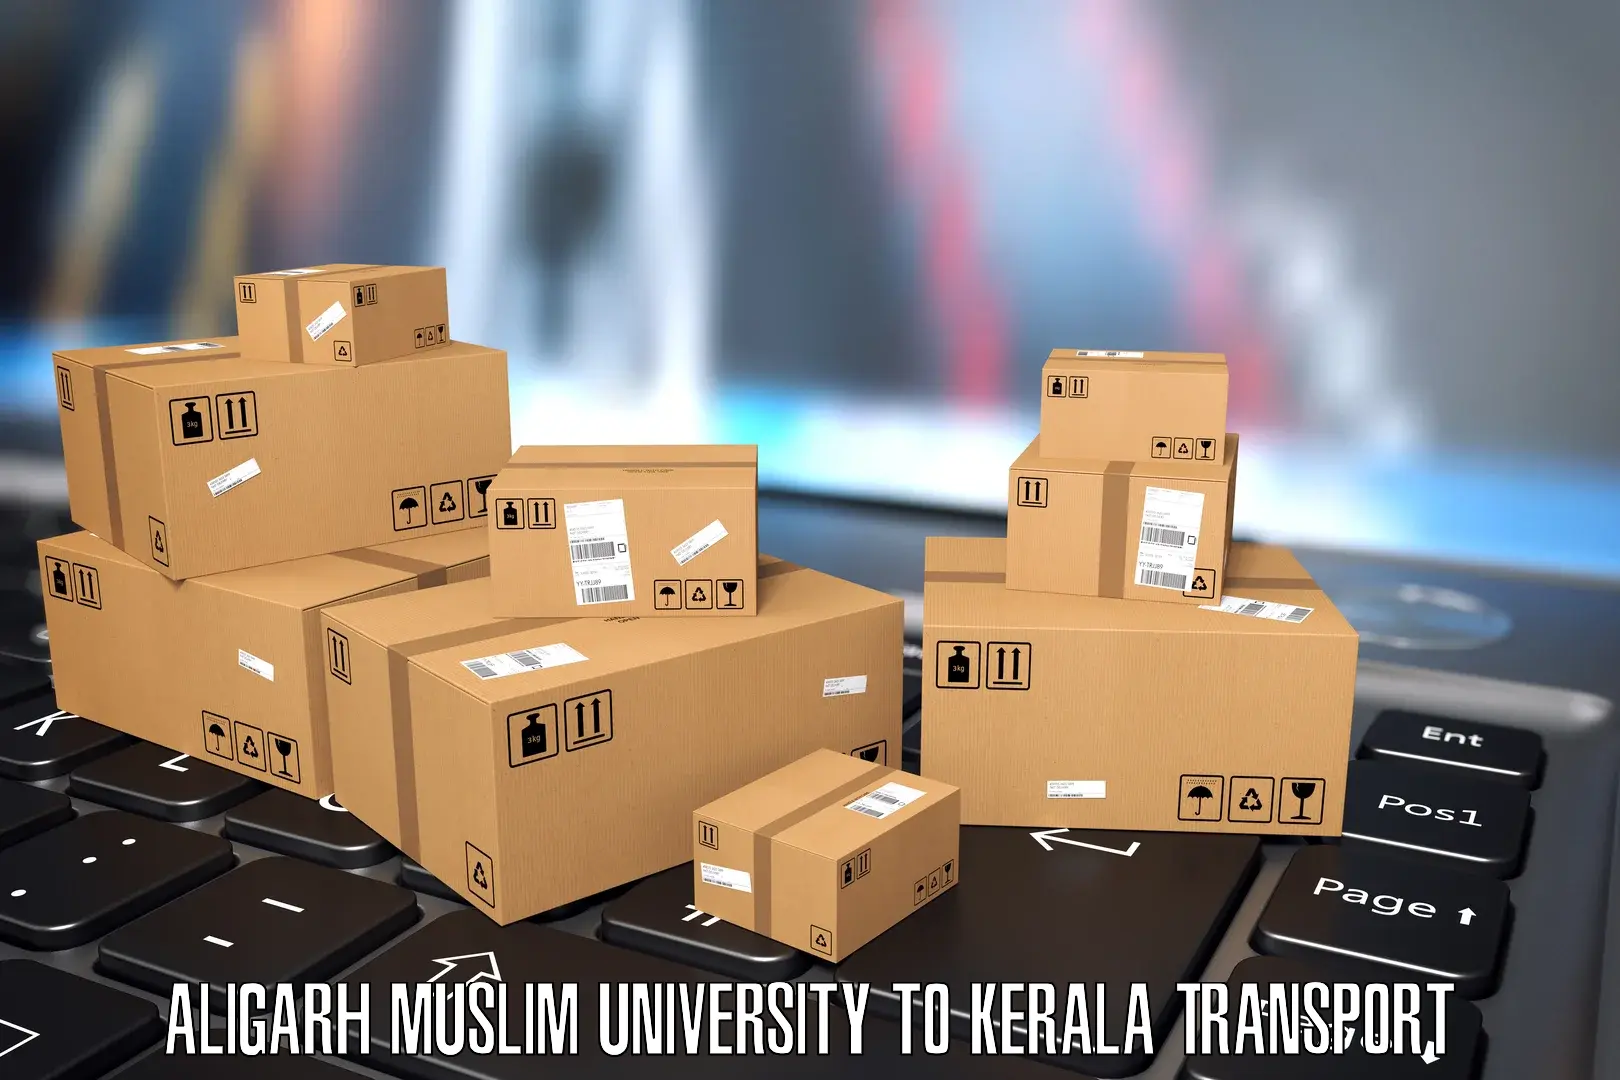 Pick up transport service Aligarh Muslim University to NIT Calicut